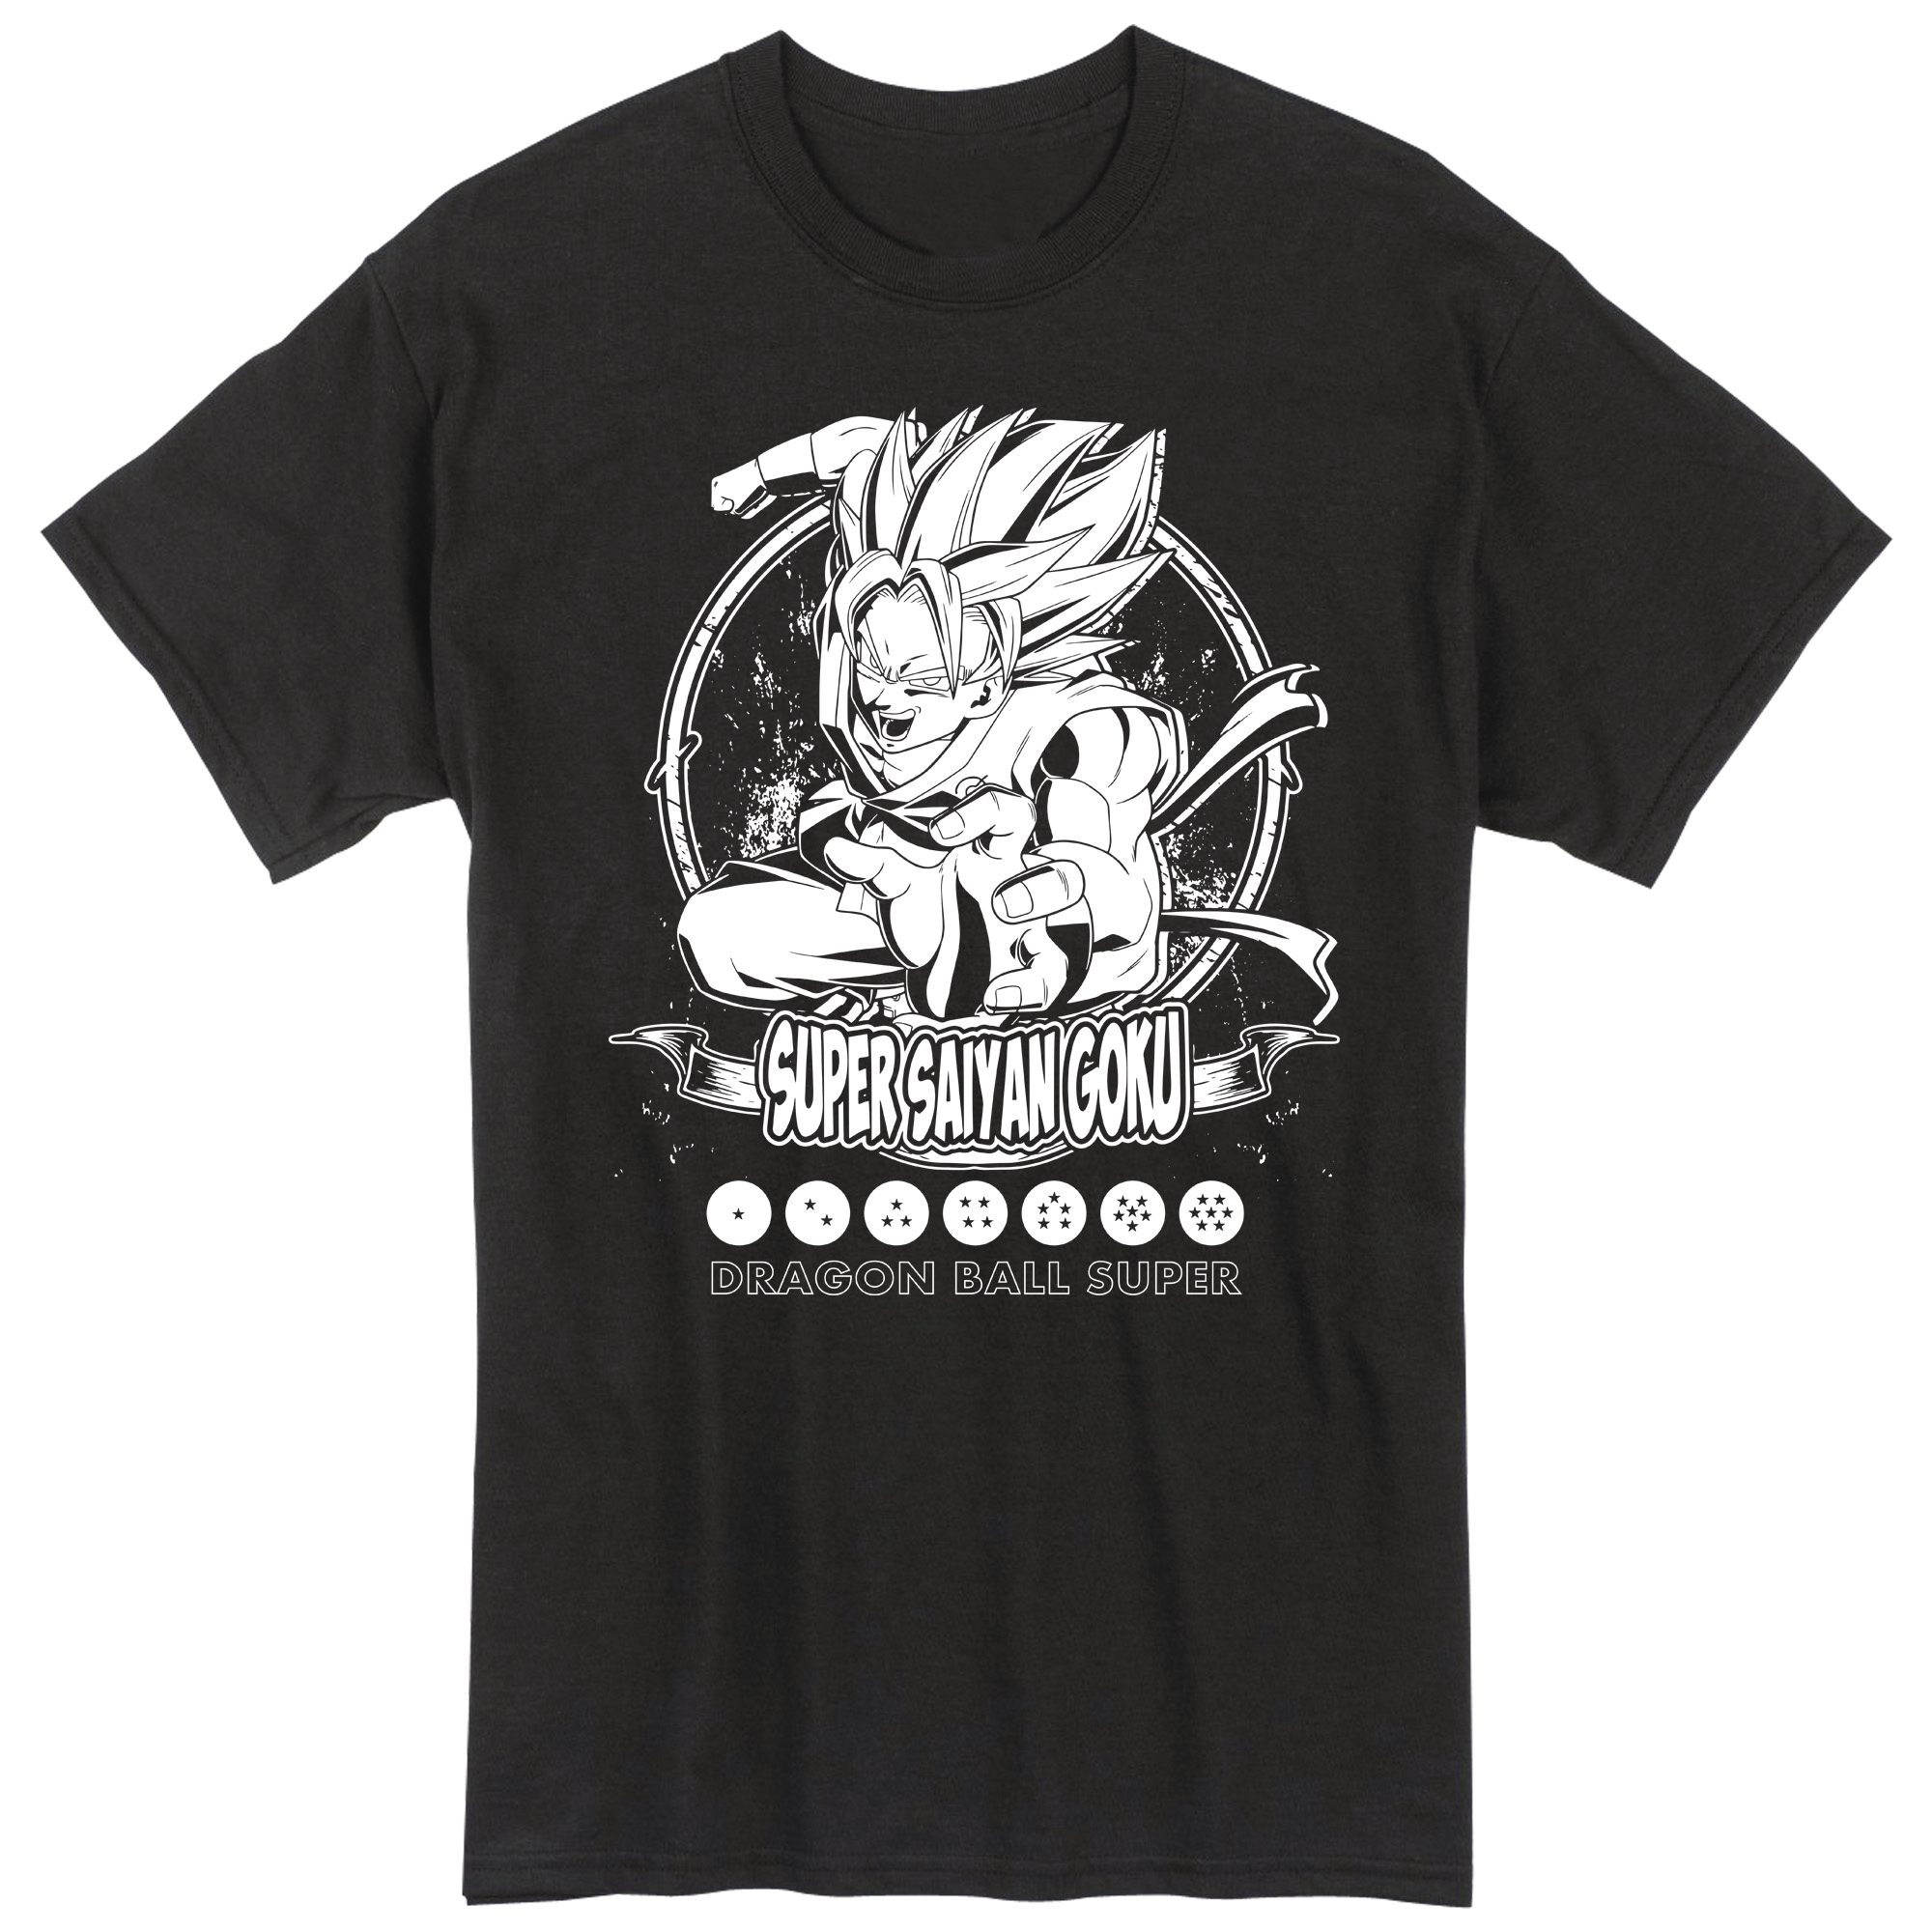 Dragon Ball Super Ss Goku Black T-Shirt Small